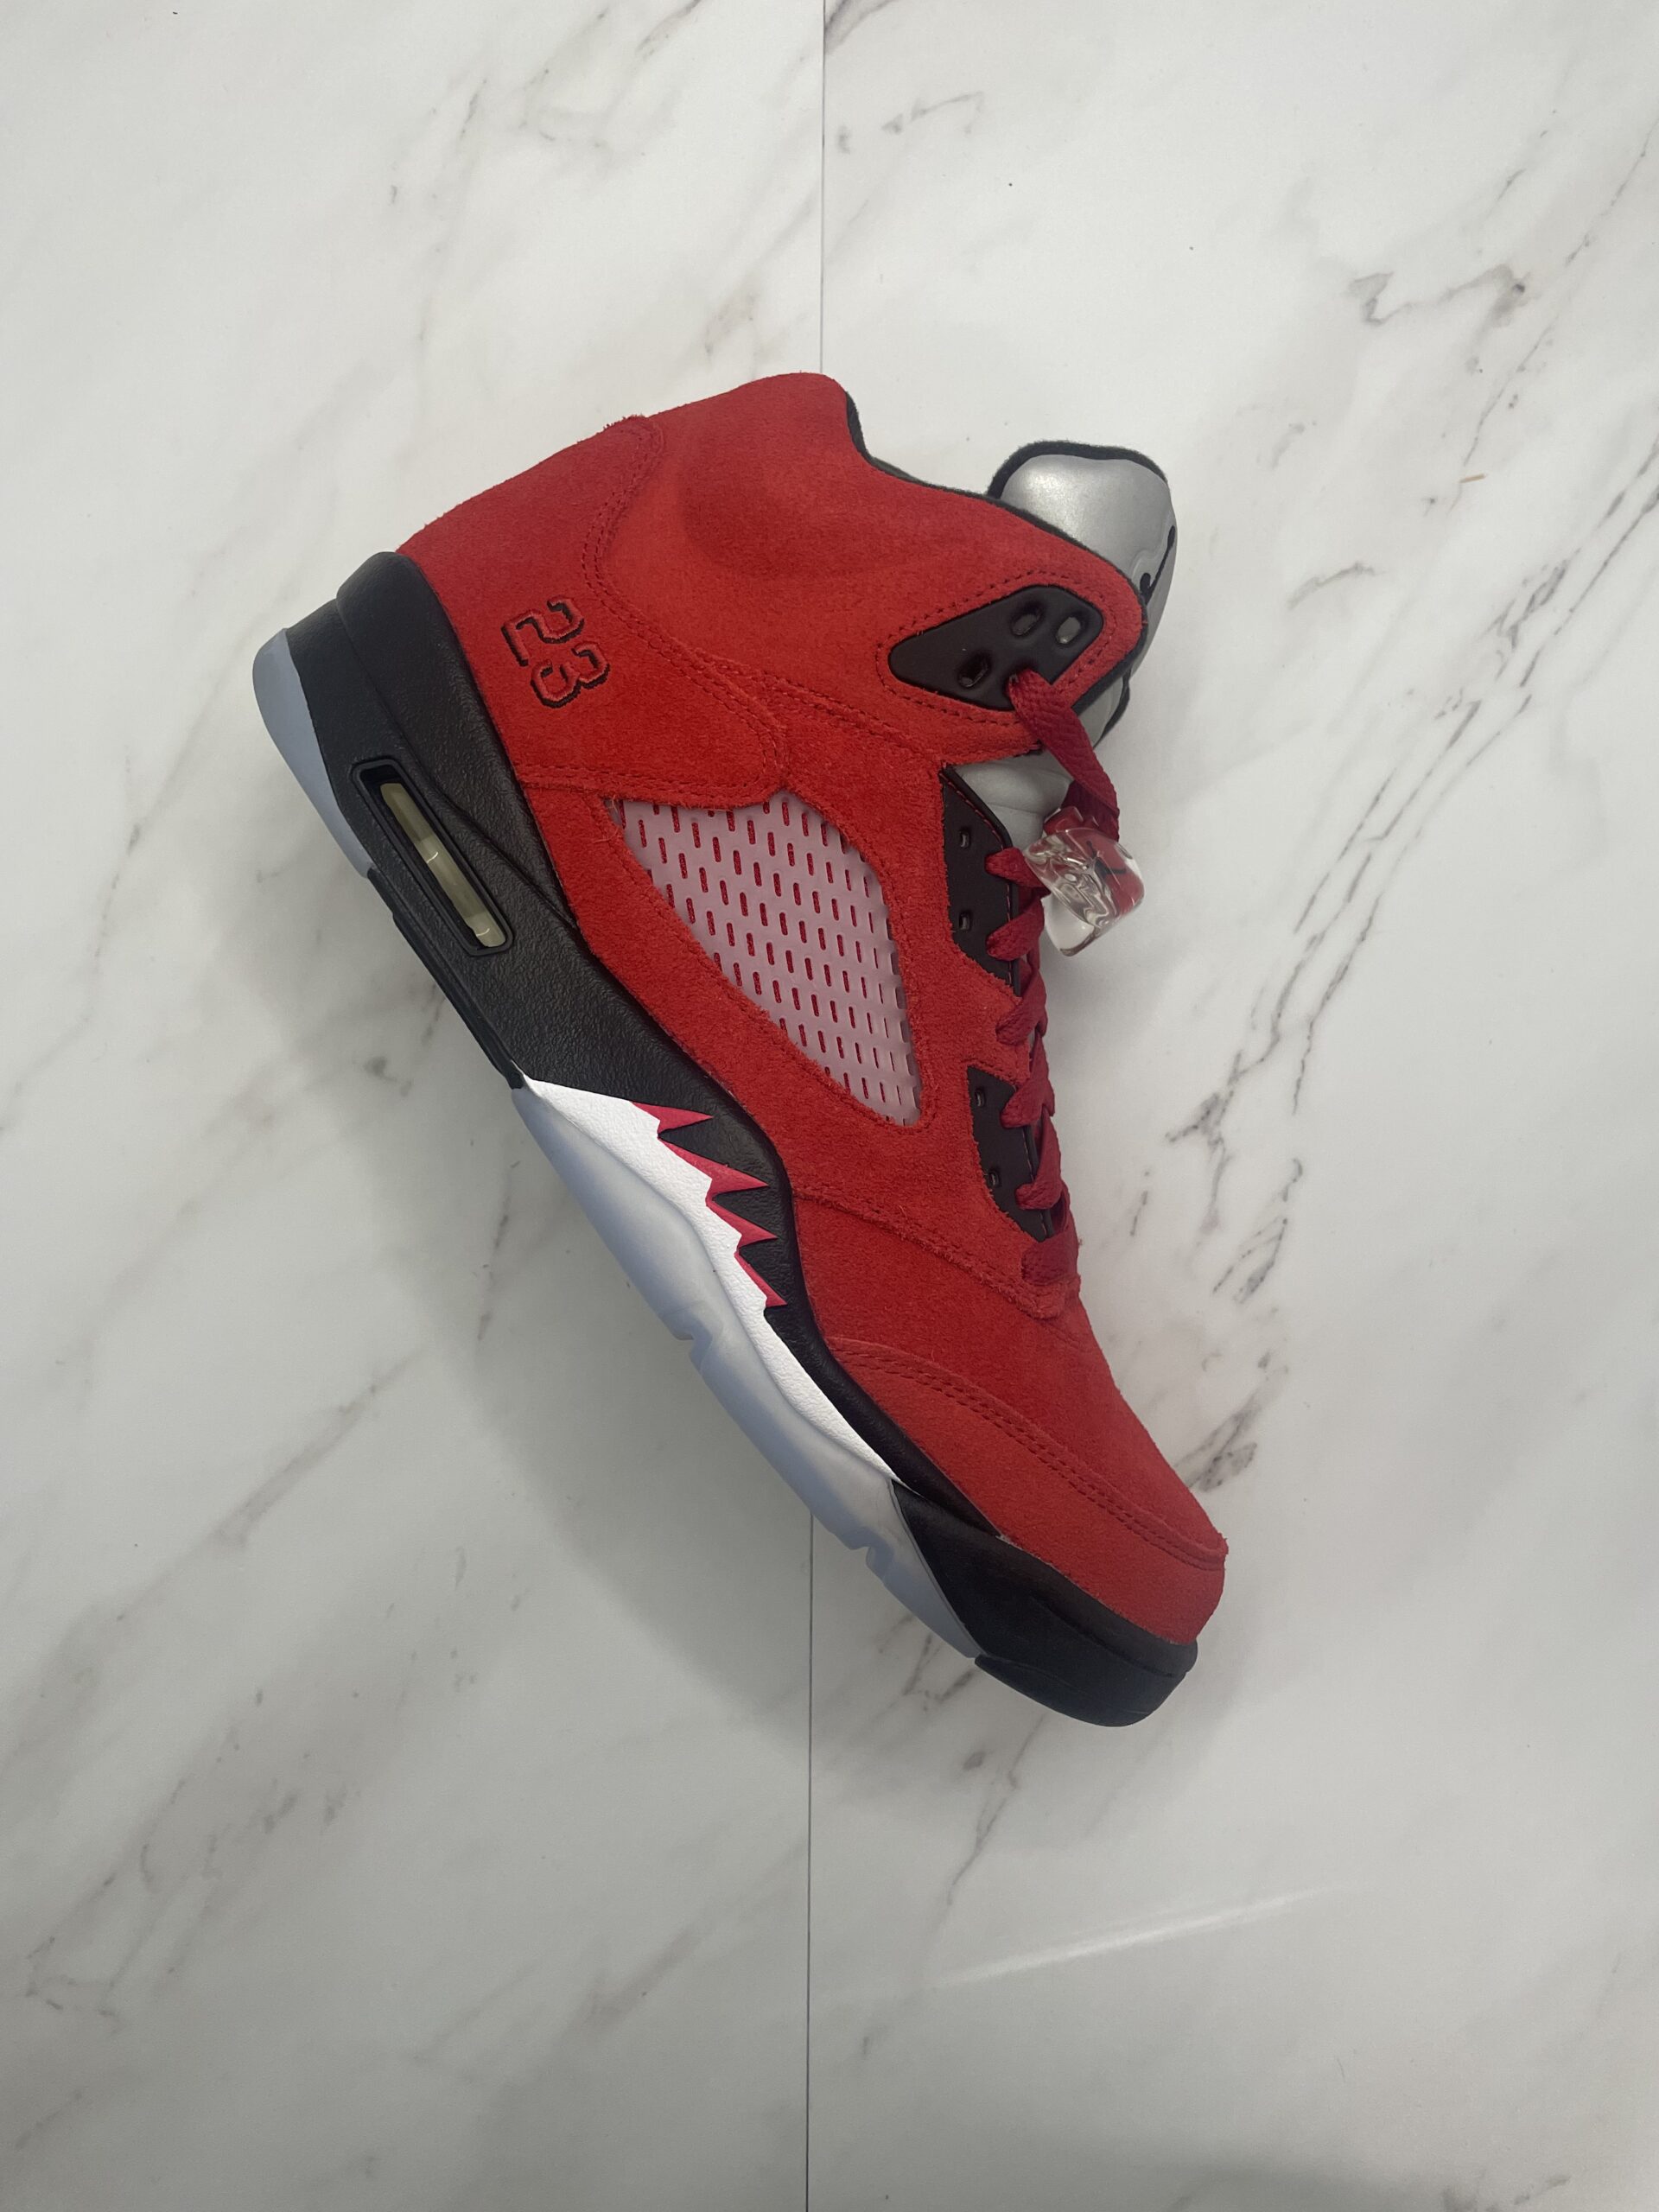 Jordan 5 Retro Red Suede 2017 for Sale, Authenticity Guaranteed